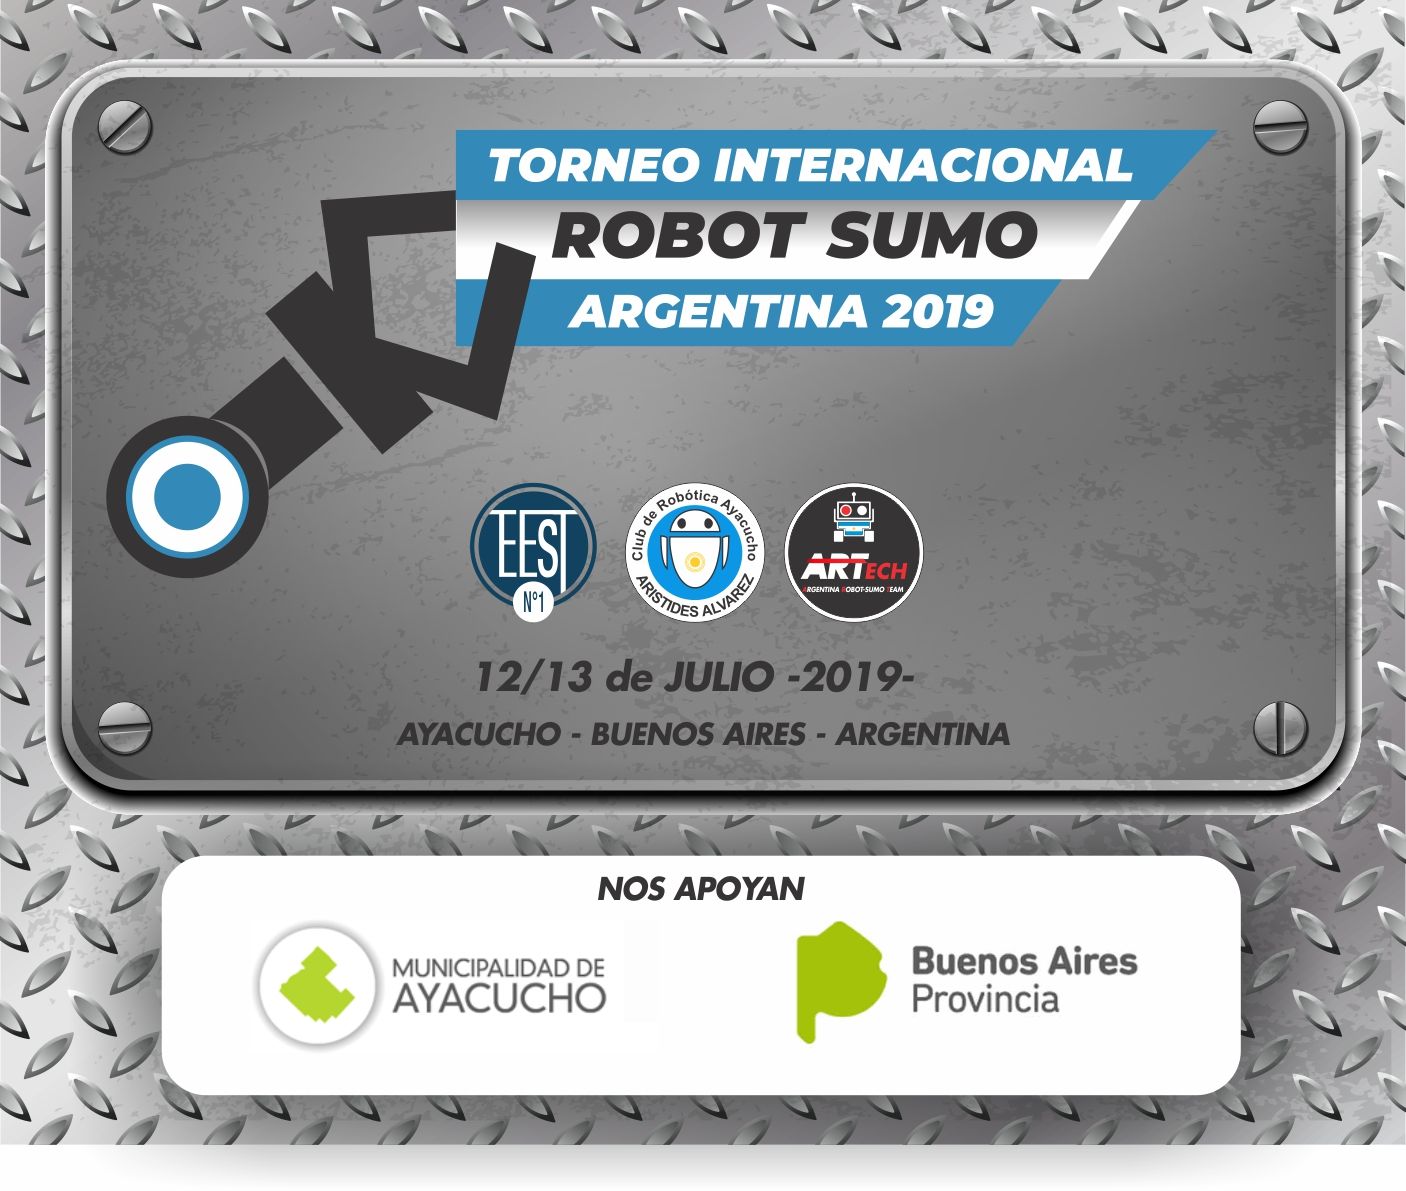 2019-05-24-torneo-internacional-robot-sumo-argentina-2019-08